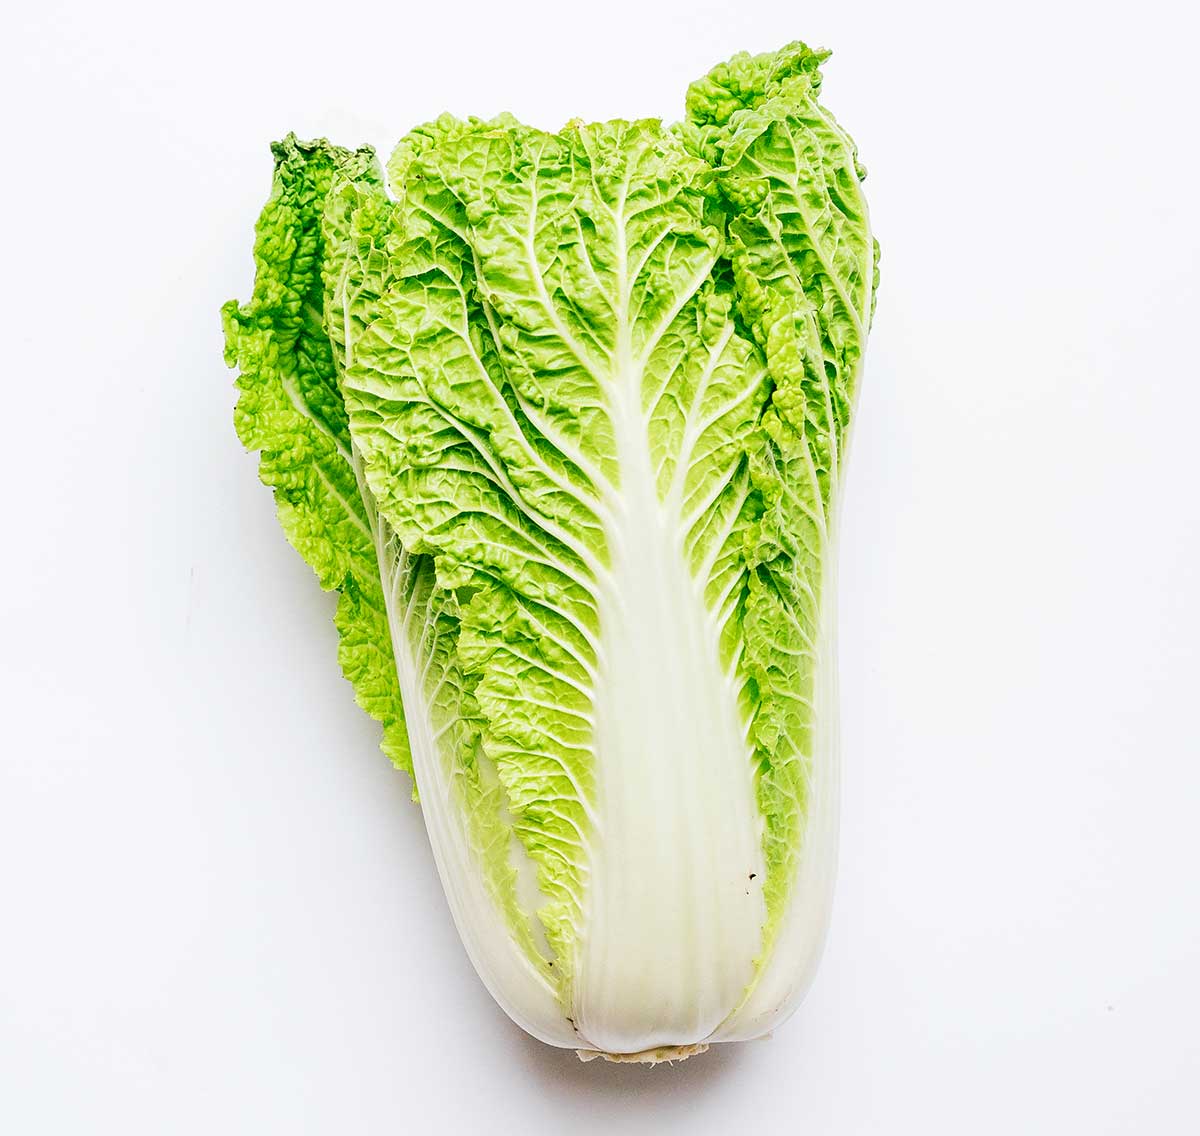 Whole napa cabbage on a white background